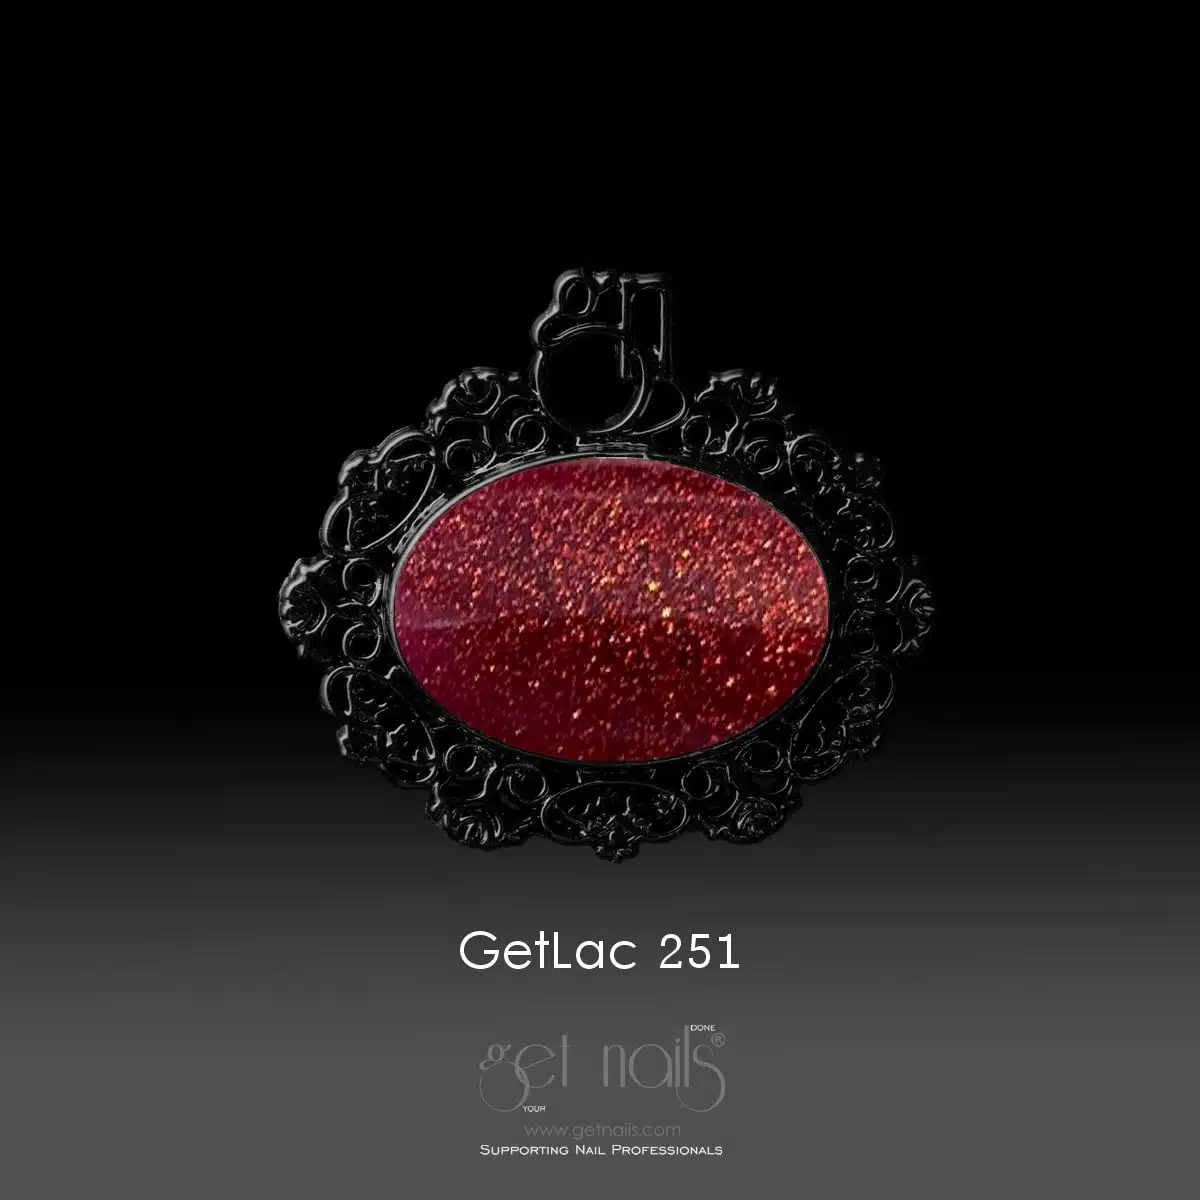 Get Nails Austria - GetLac 251 15g